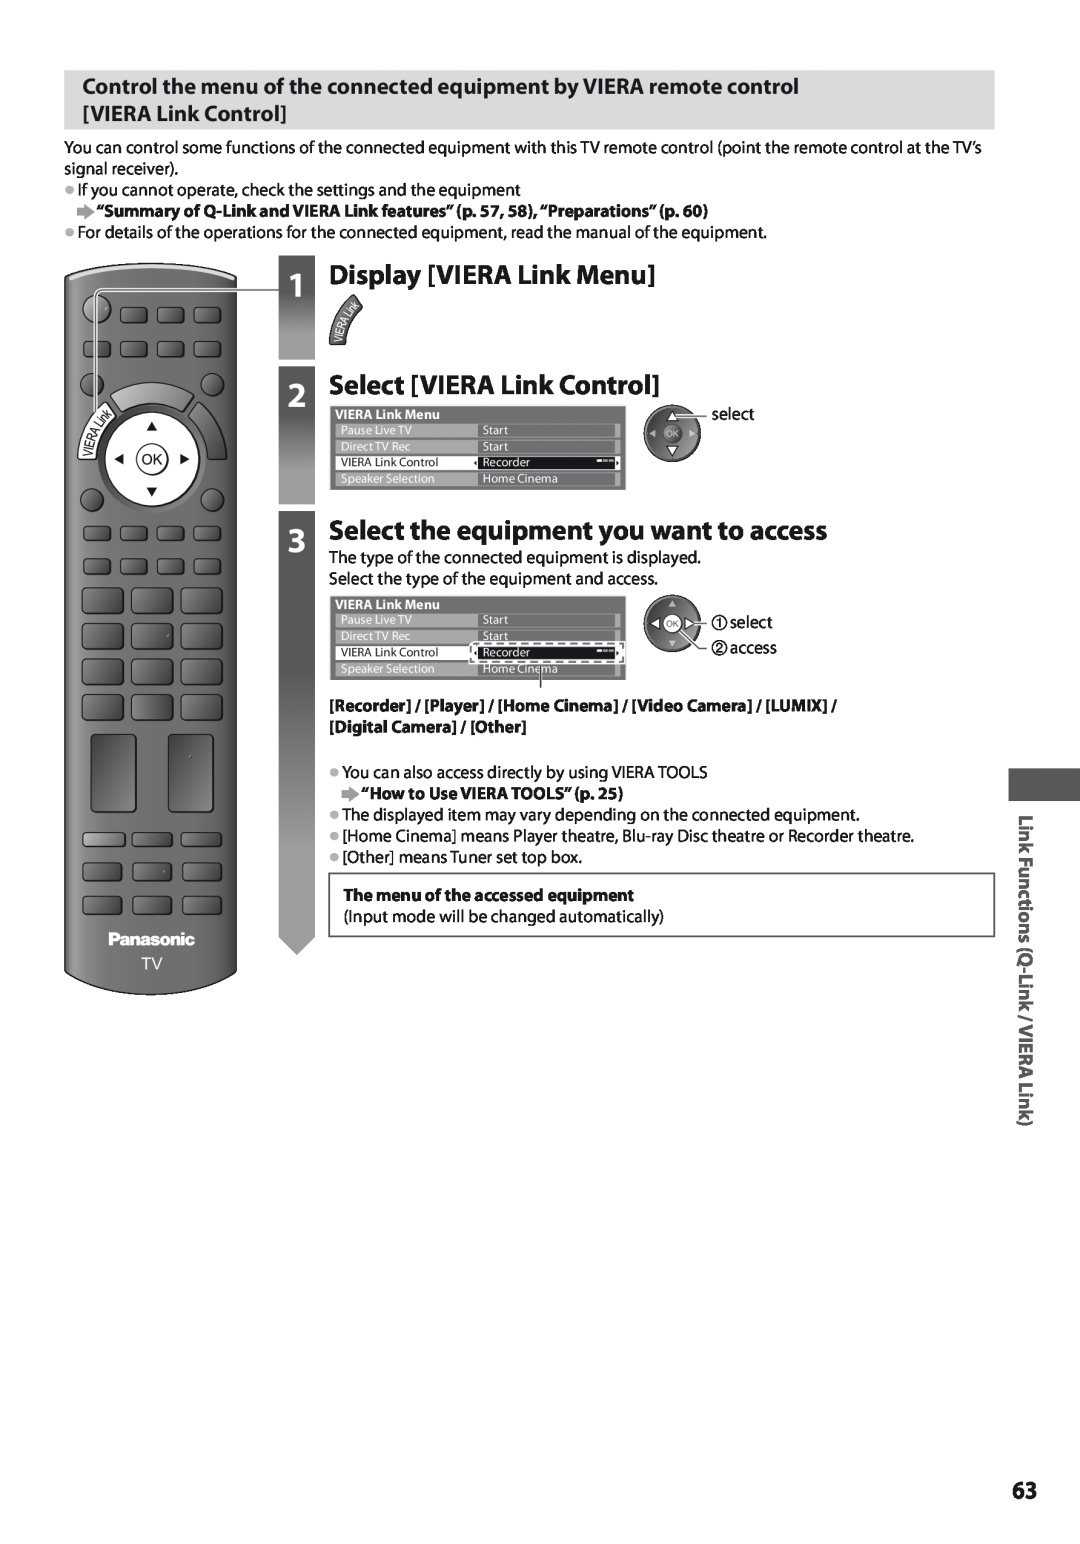 Panasonic TX-L42U3E, TX-L32U3E Display VIERA Link Menu, Select VIERA Link Control, Select the equipment you want to access 